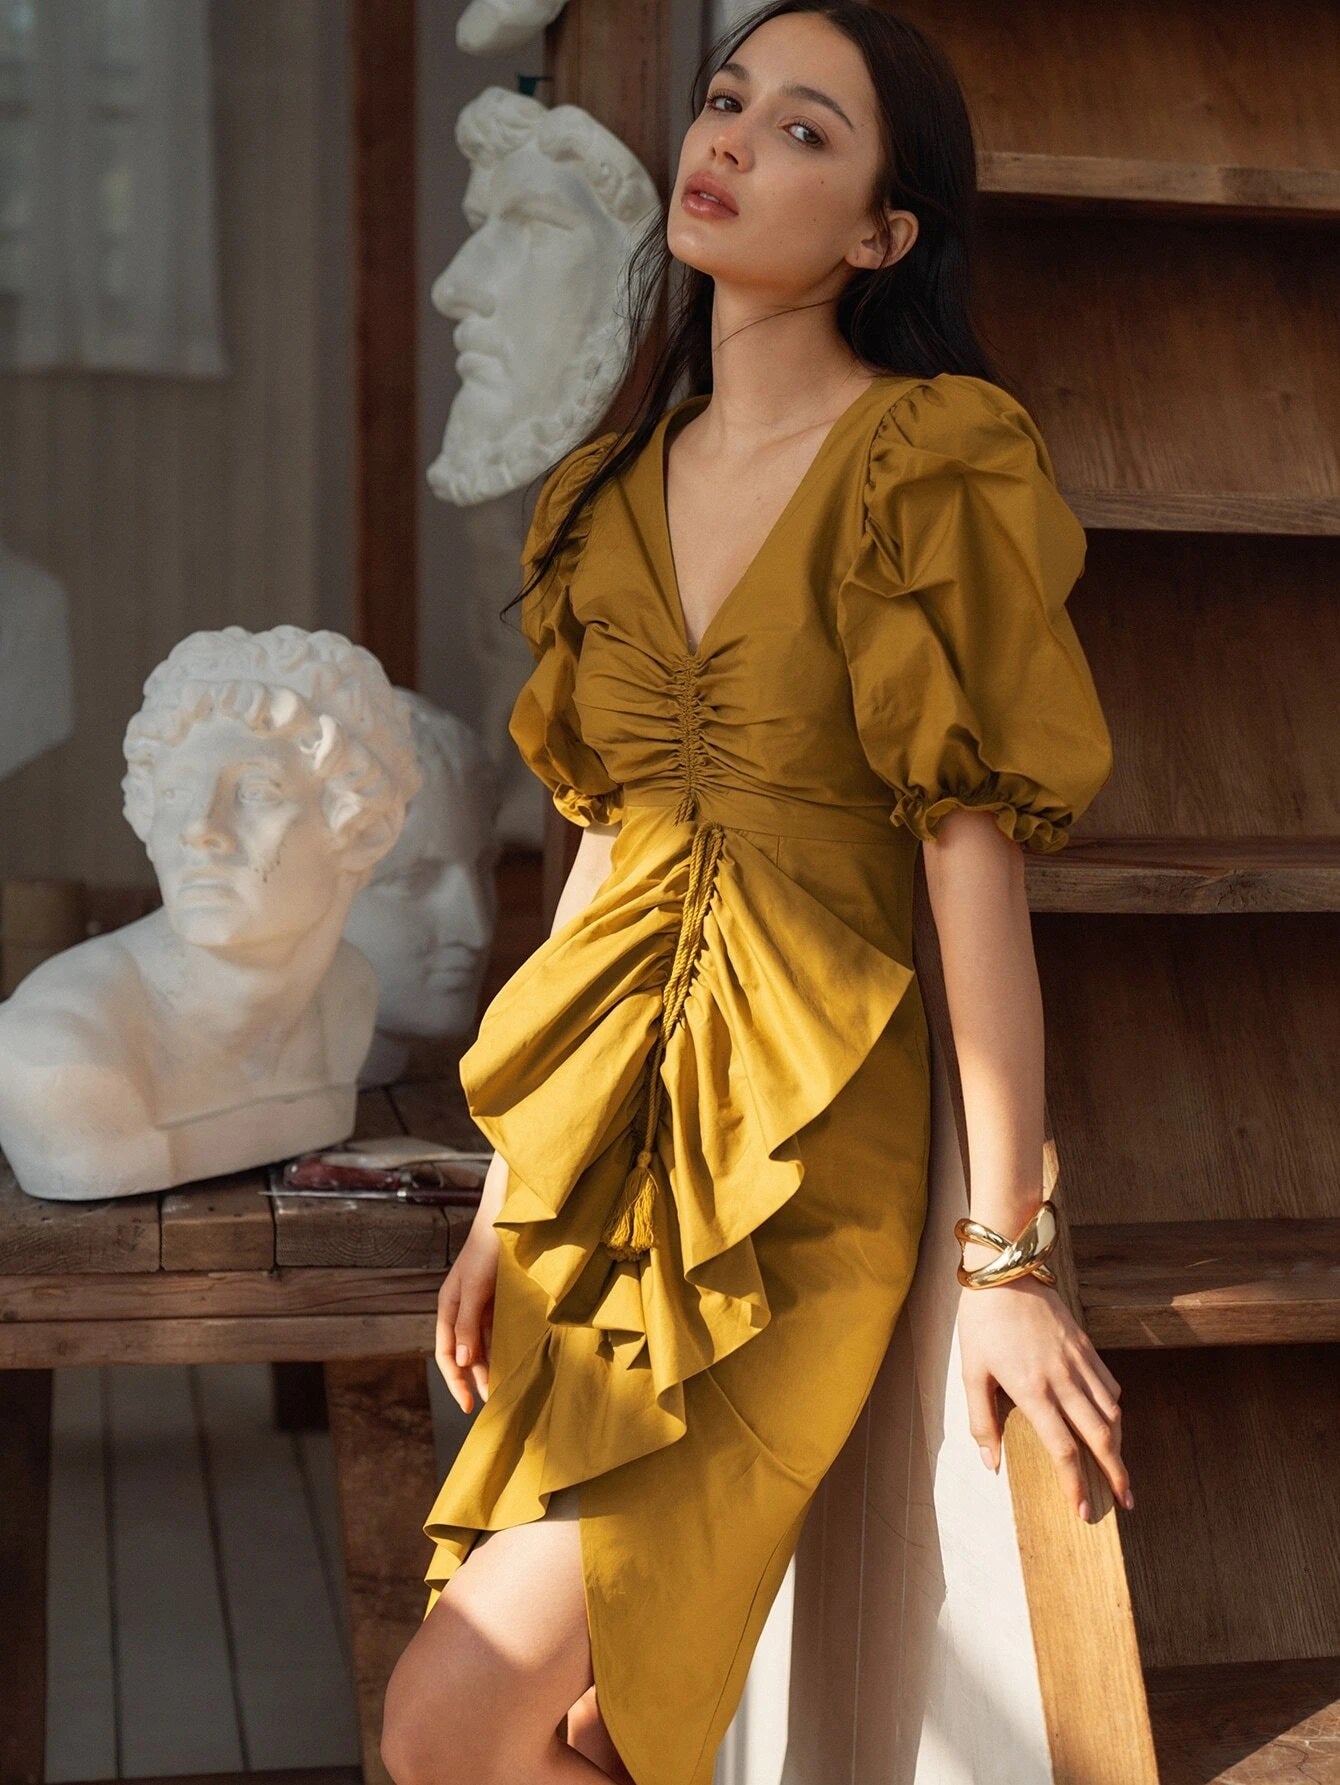 CM-ES128336 Women Elegant Seoul Style V-Neck Puff Sleeve Ruched Slim Fit Dress - Mustard Yellow